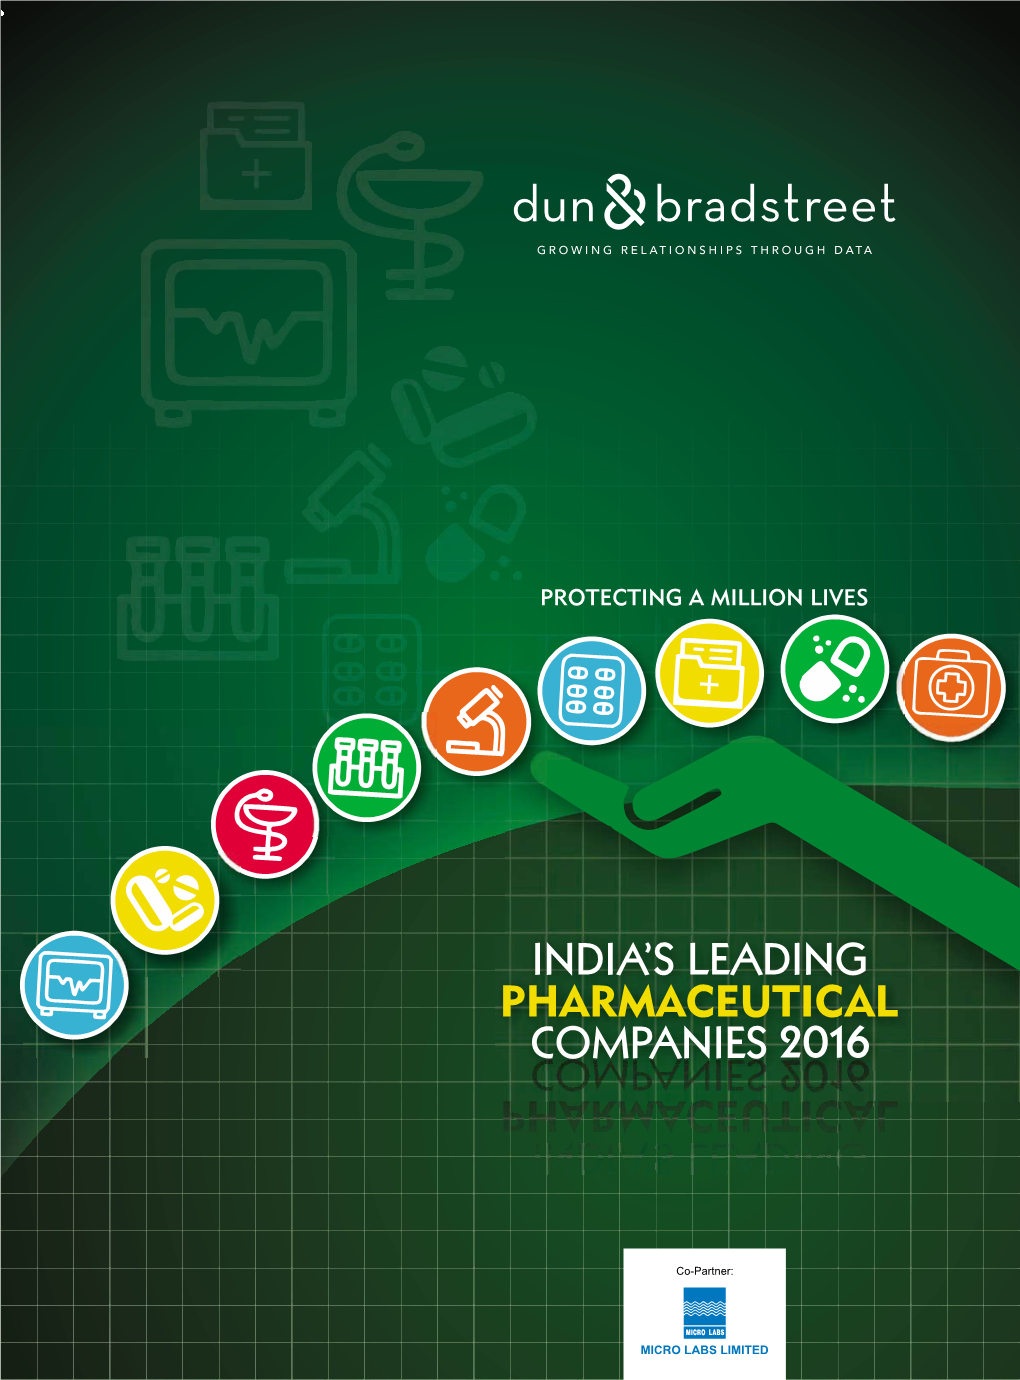 Launch of Dun & Bradstreet India's Leading Pharmaceutical Companies 2016